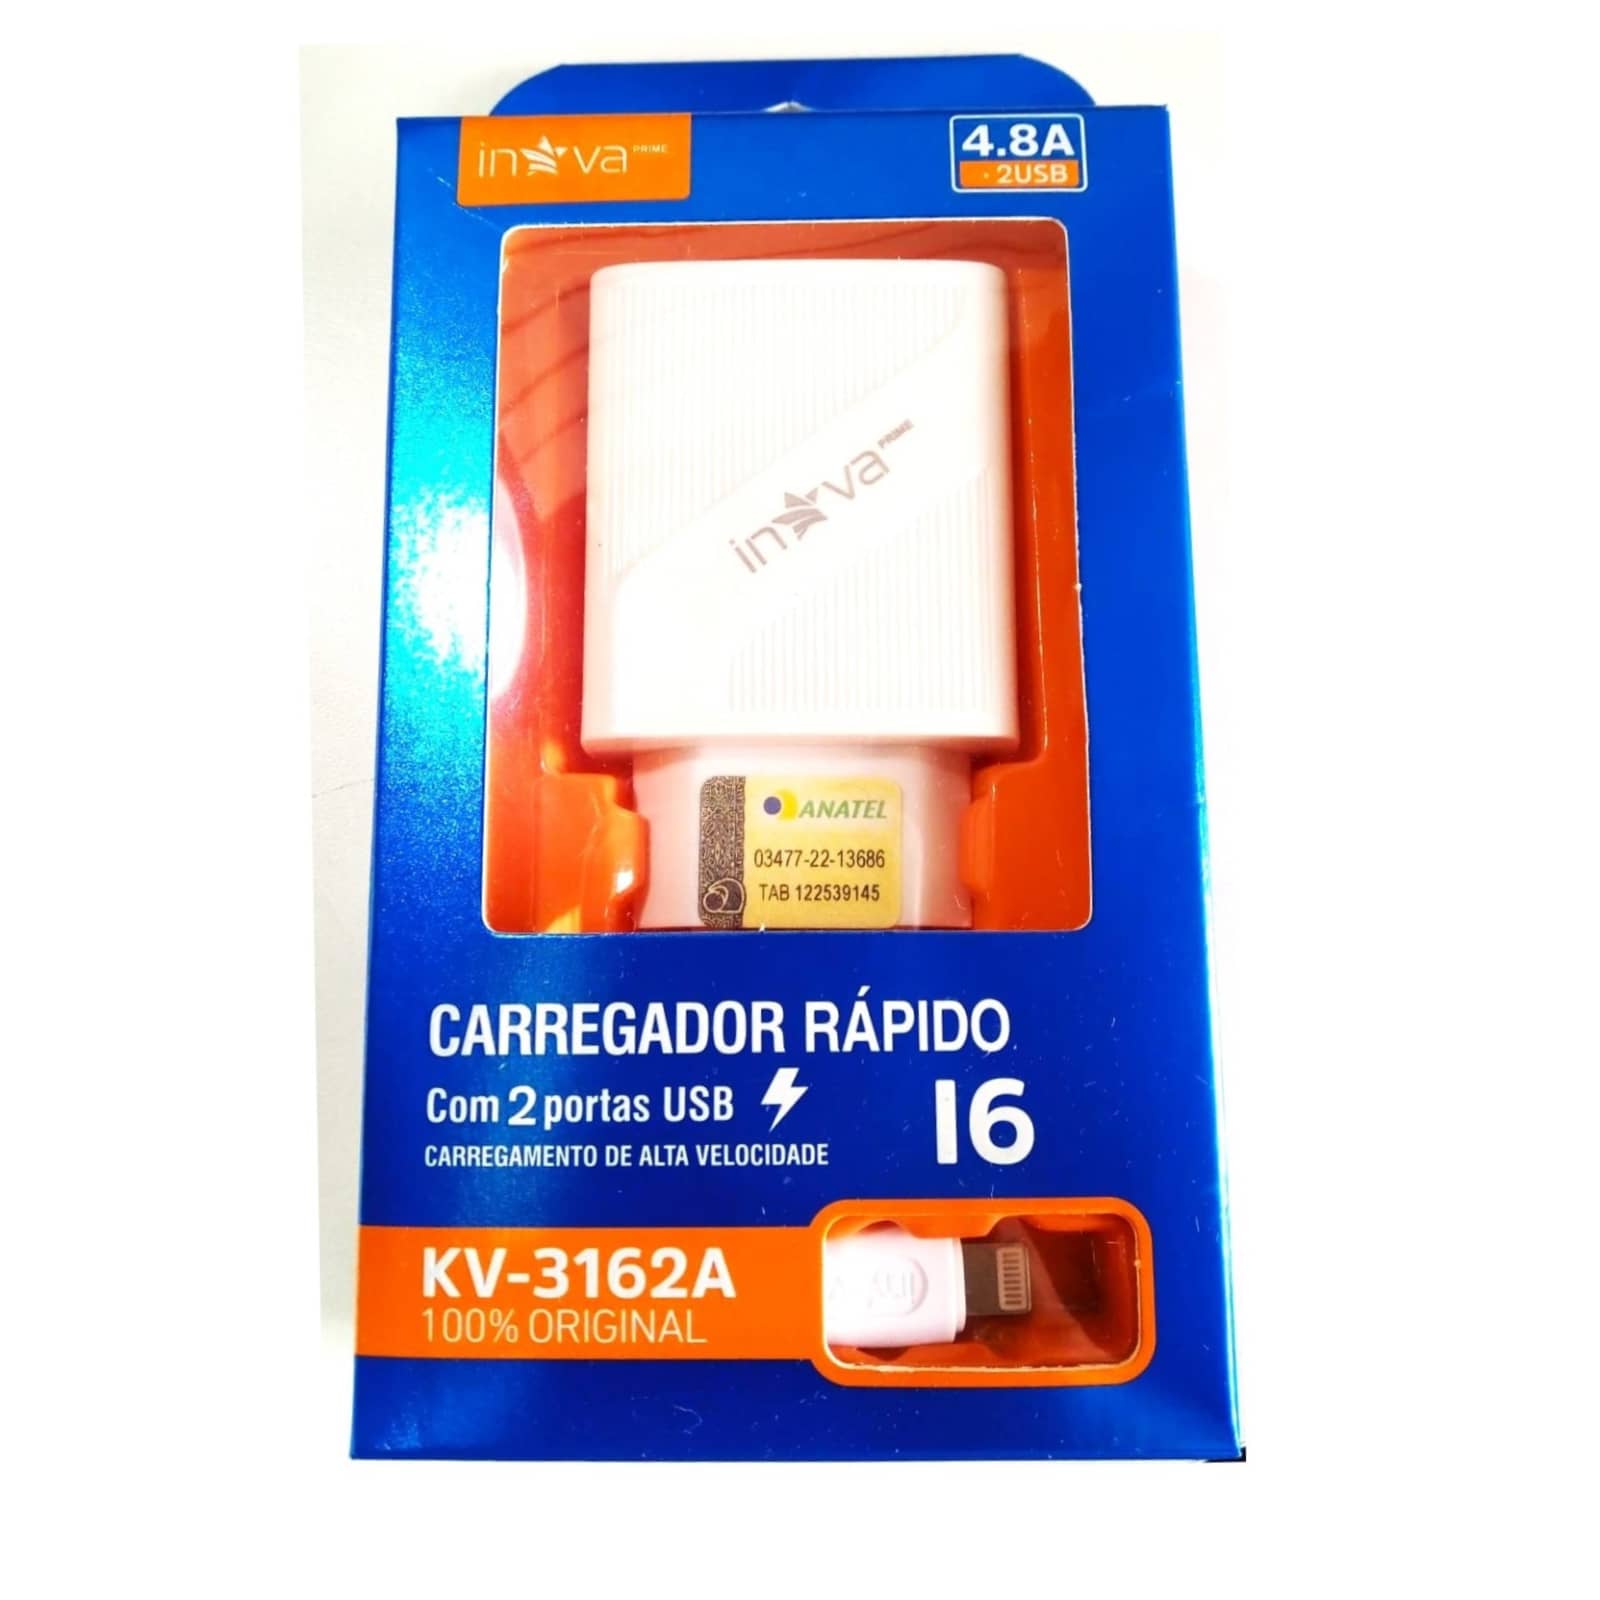 AC CARREGADOR IPHONE 4.8 AP 3146a/3162a